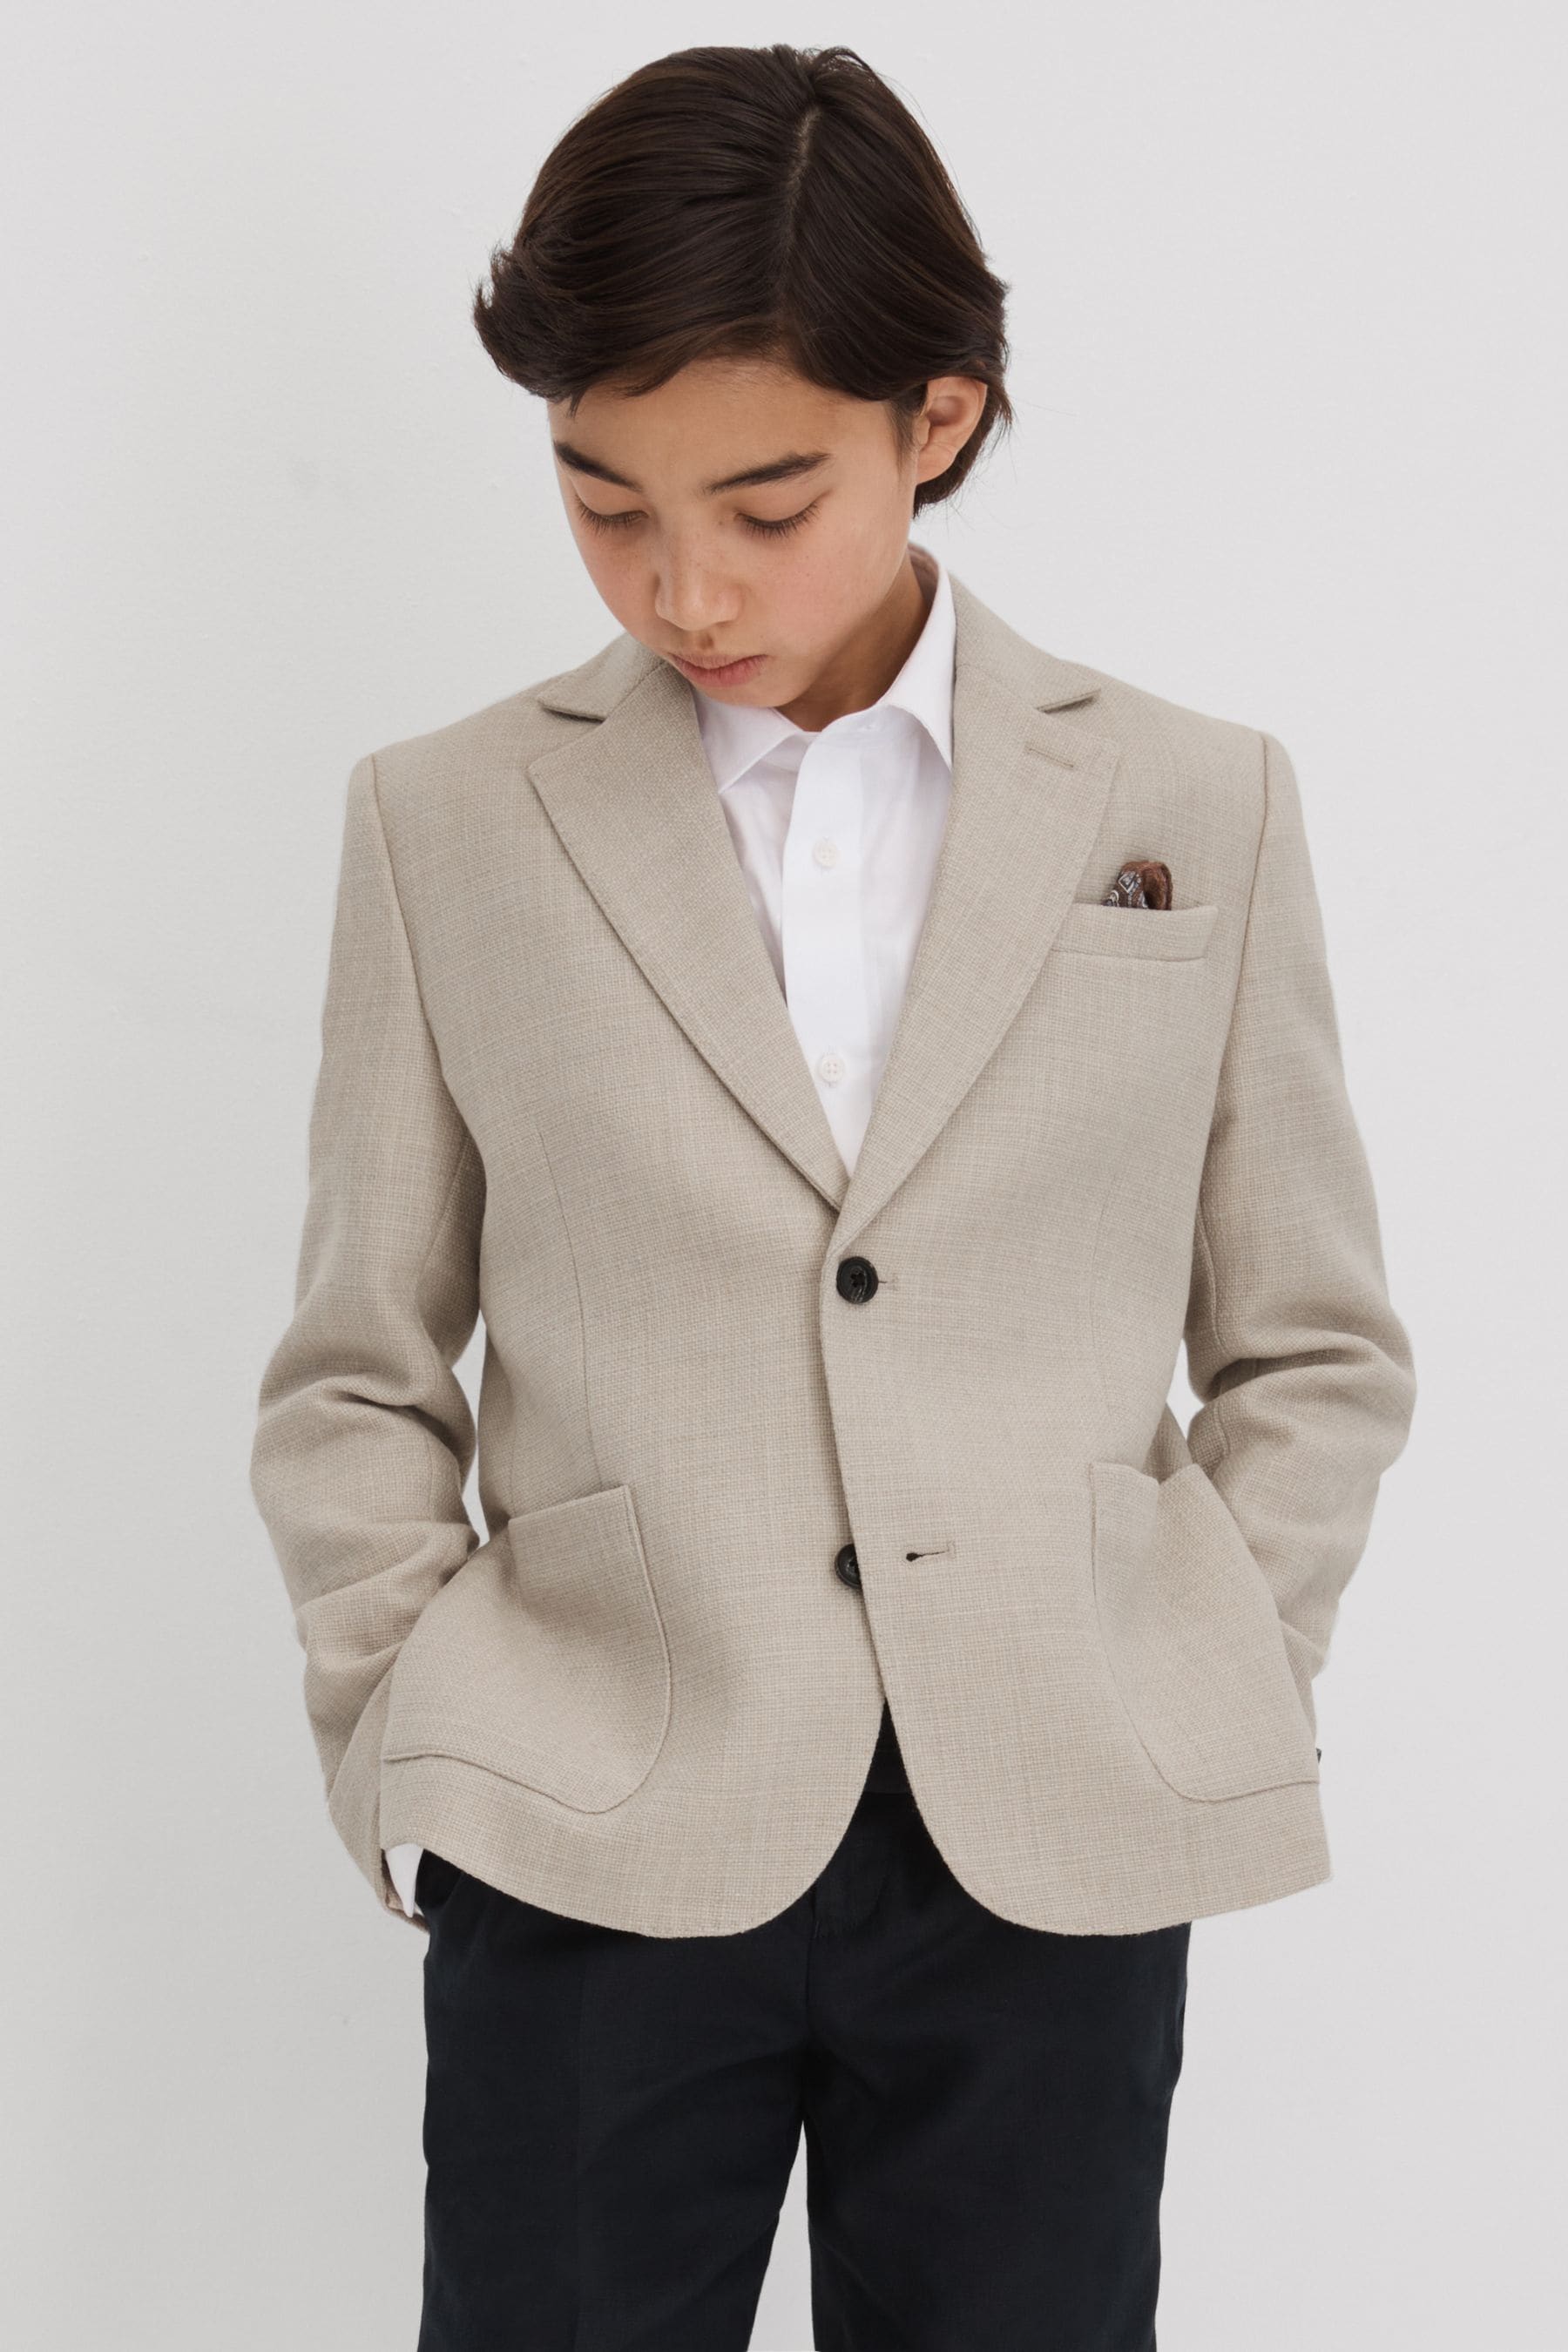 Shop Reiss Attire - Stone Junior Textured Wool Blend Single Breasted Blazer, Age 3-4 Years